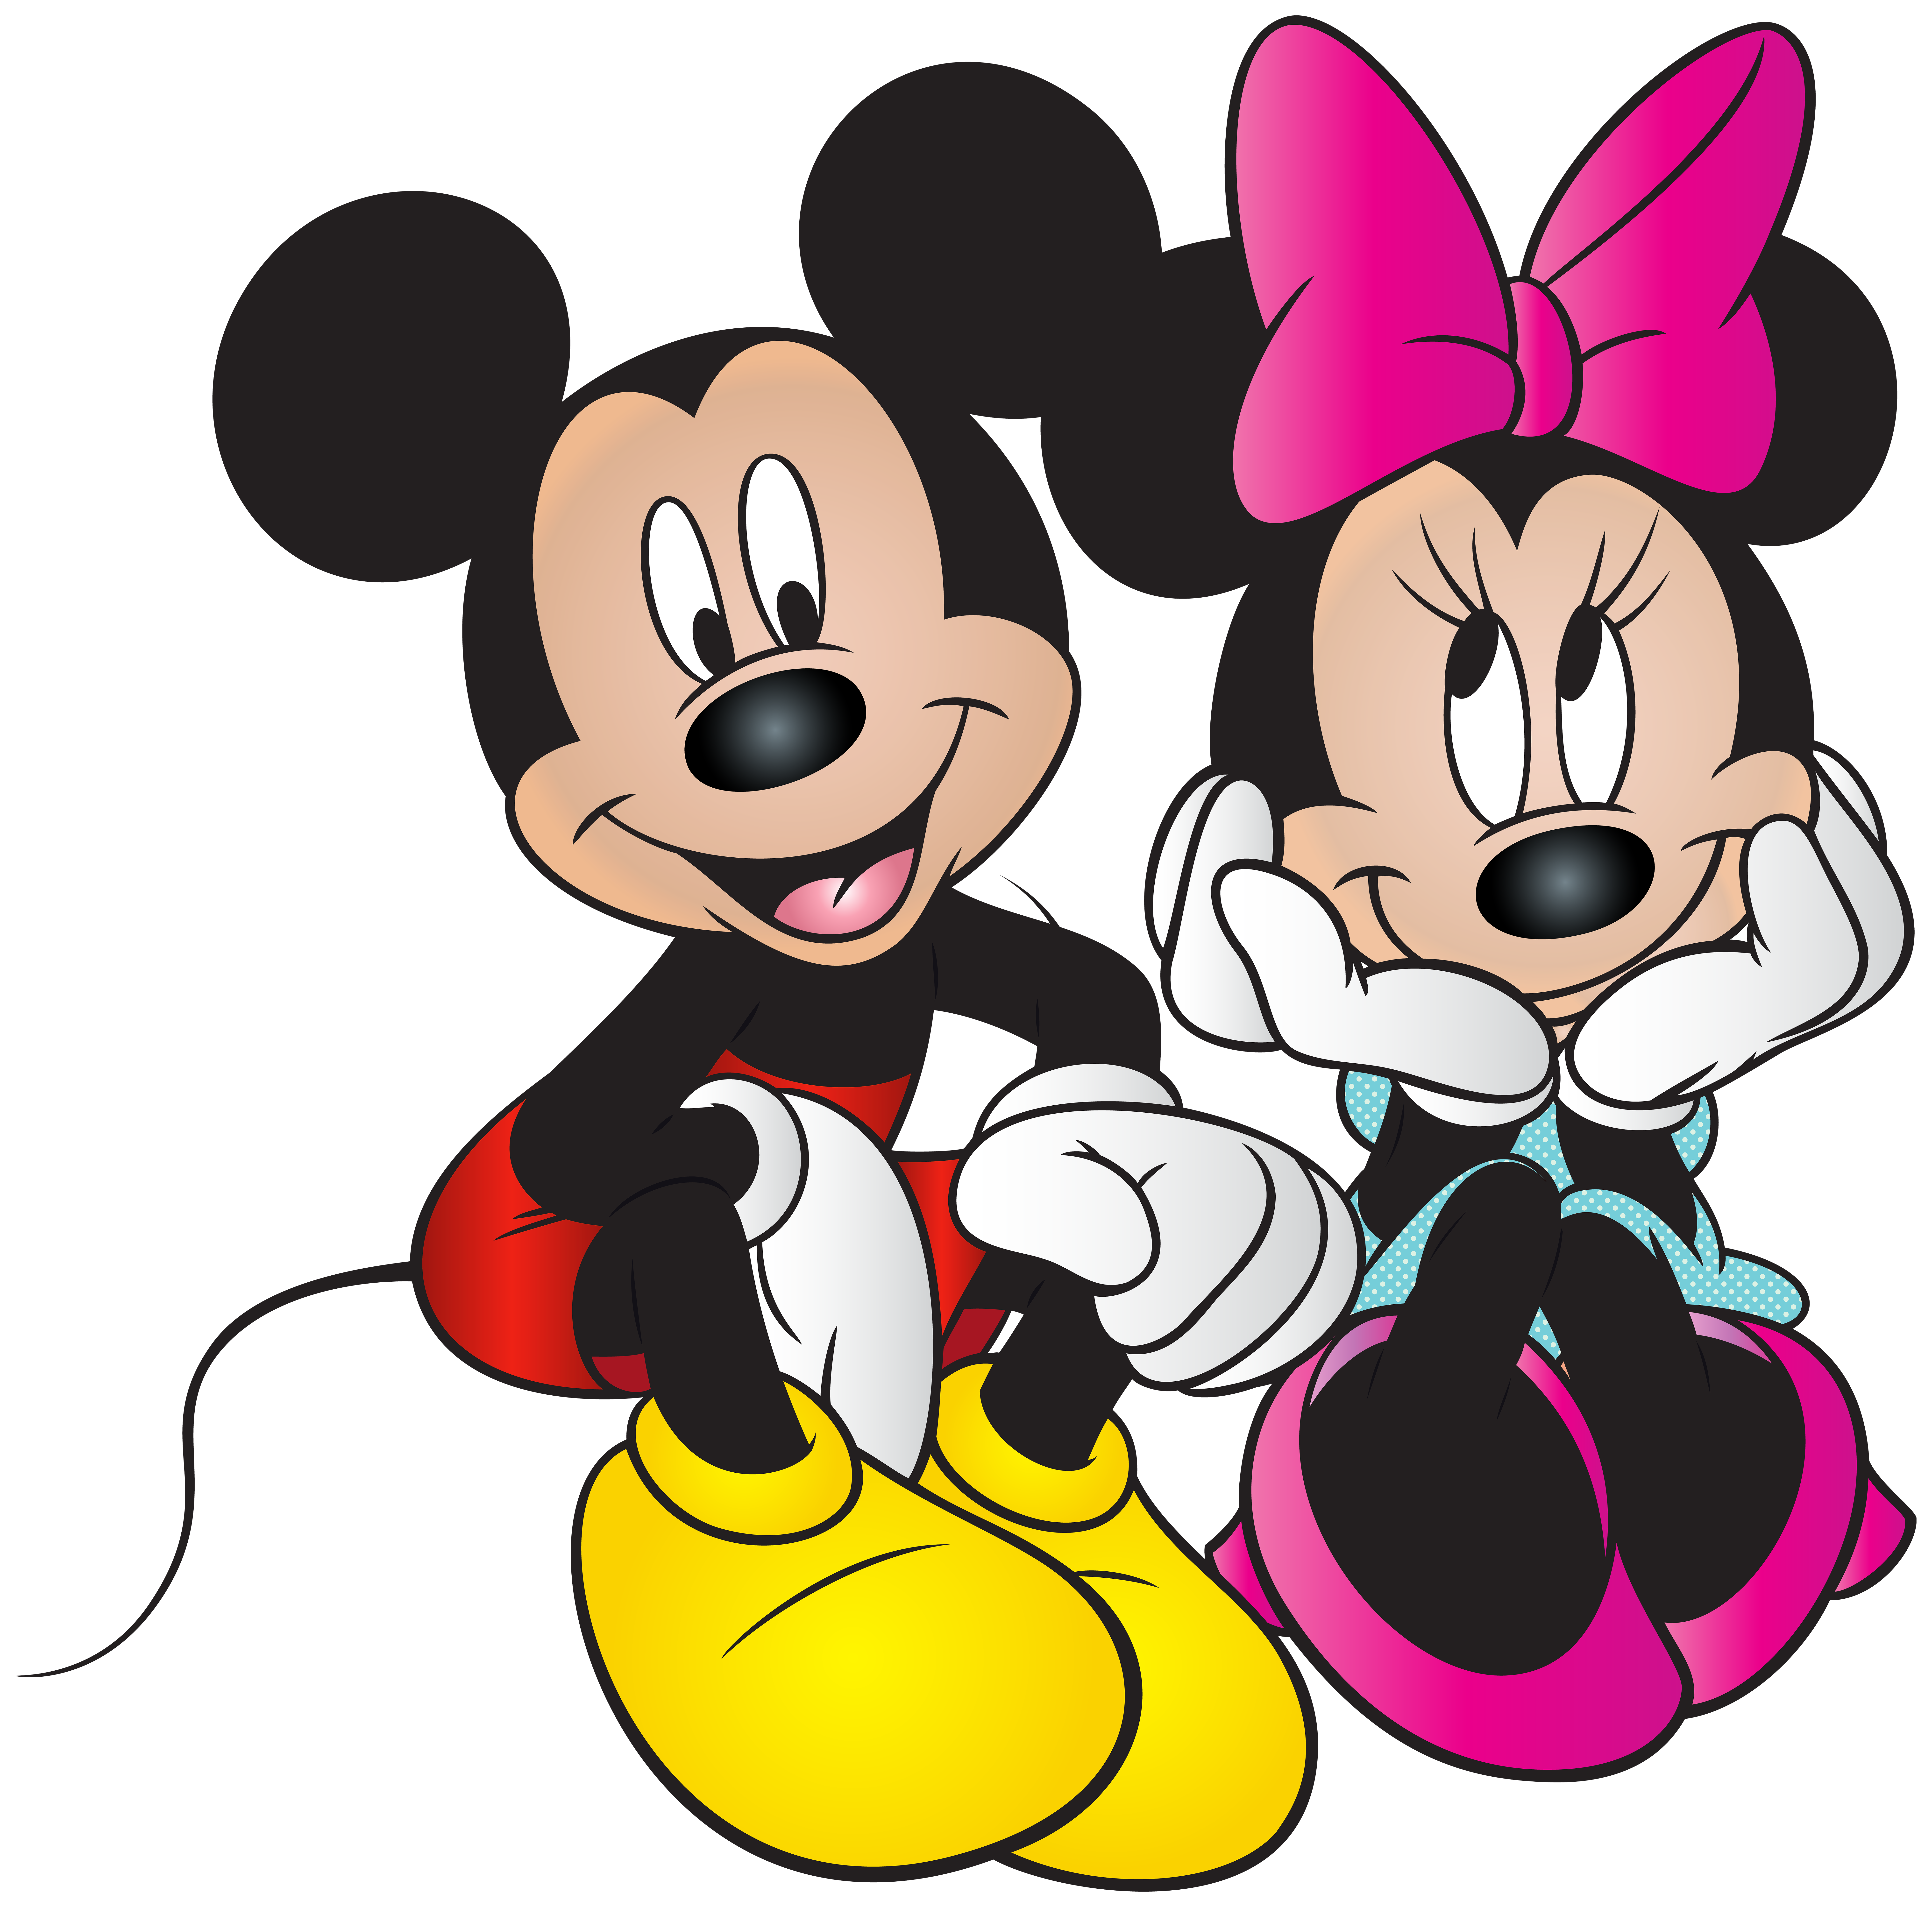 Mickey and minnie.